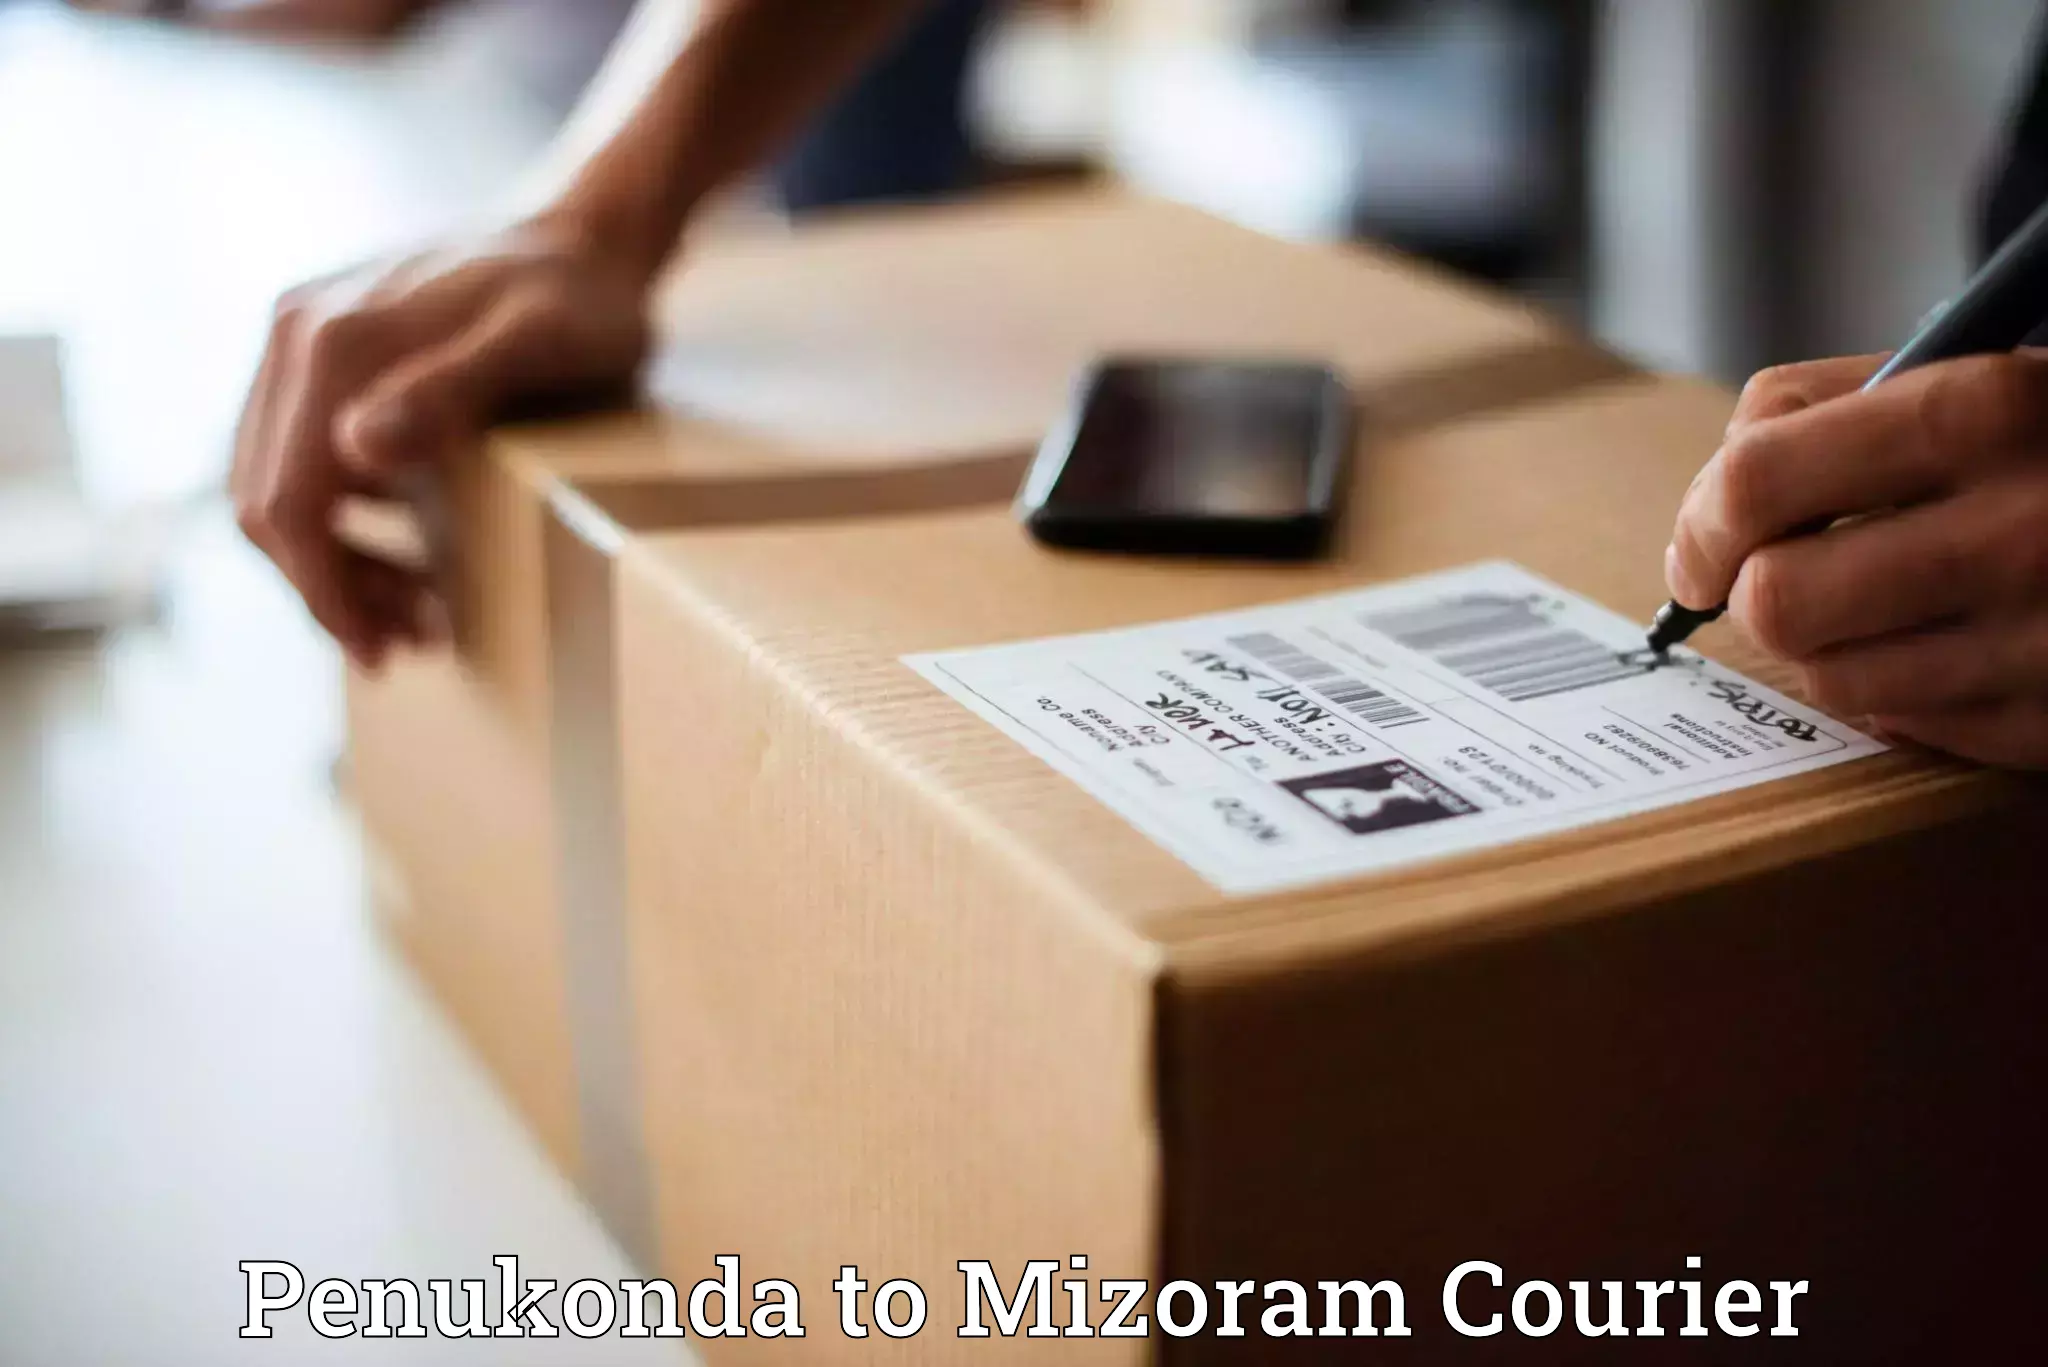 Urgent courier needs in Penukonda to Mizoram